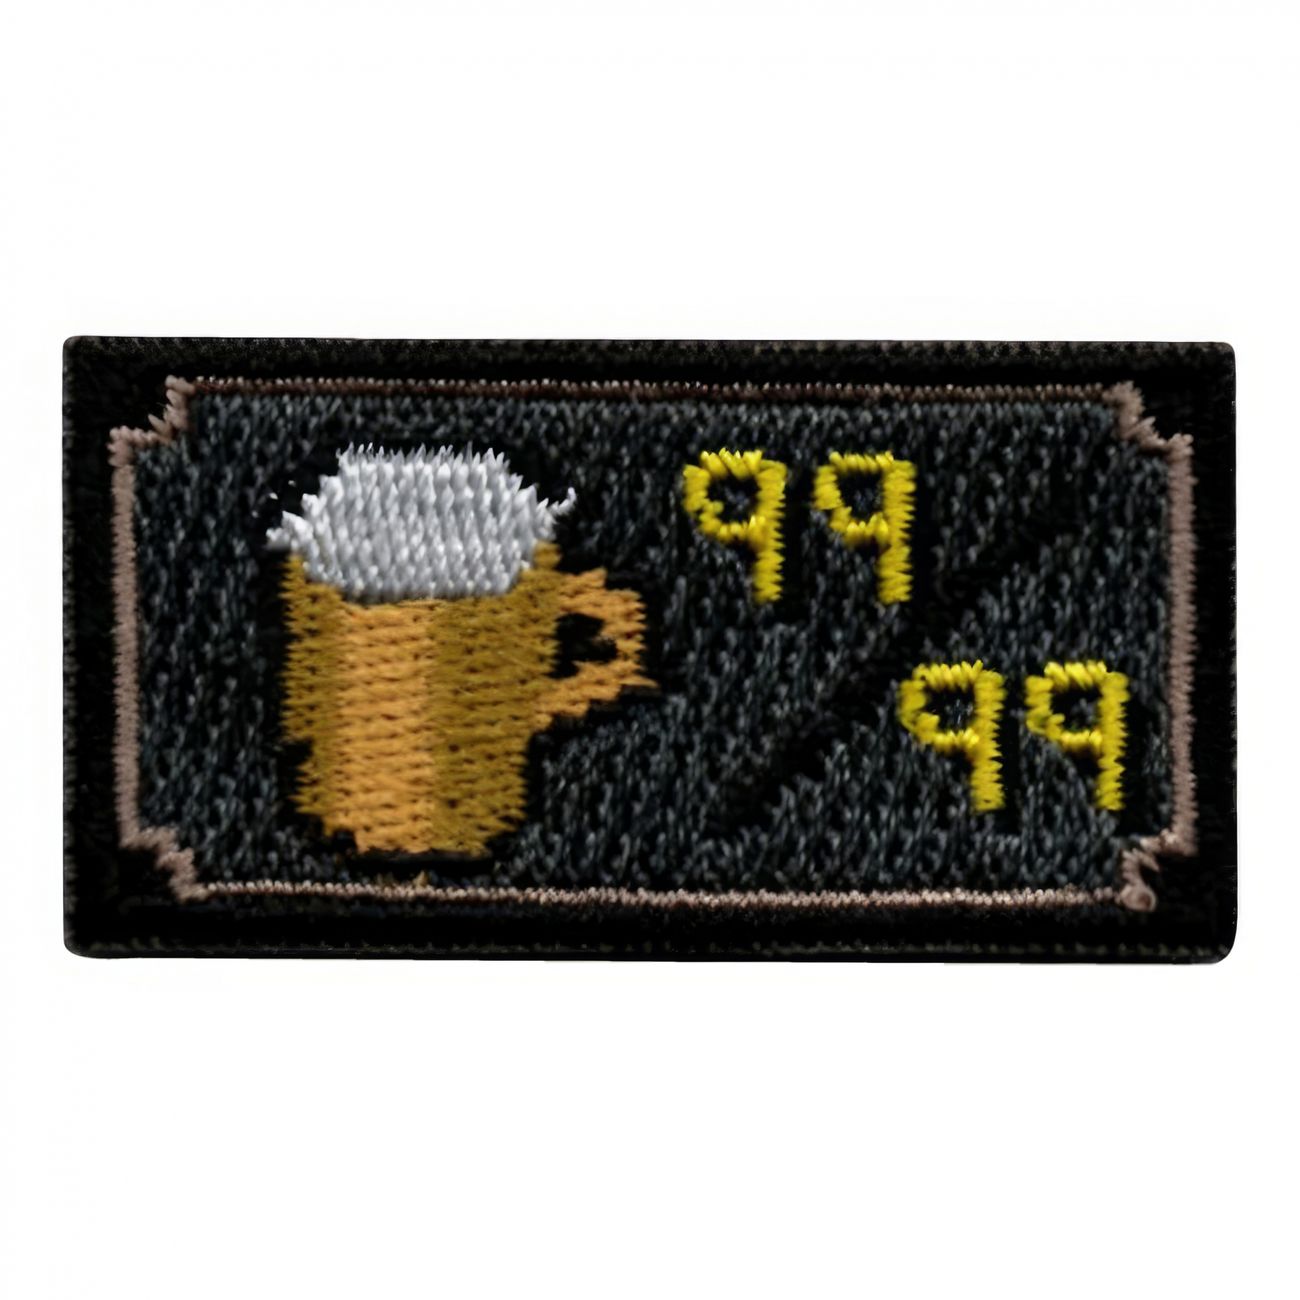 tygmarke-beer-lvl-99-a-94313-1